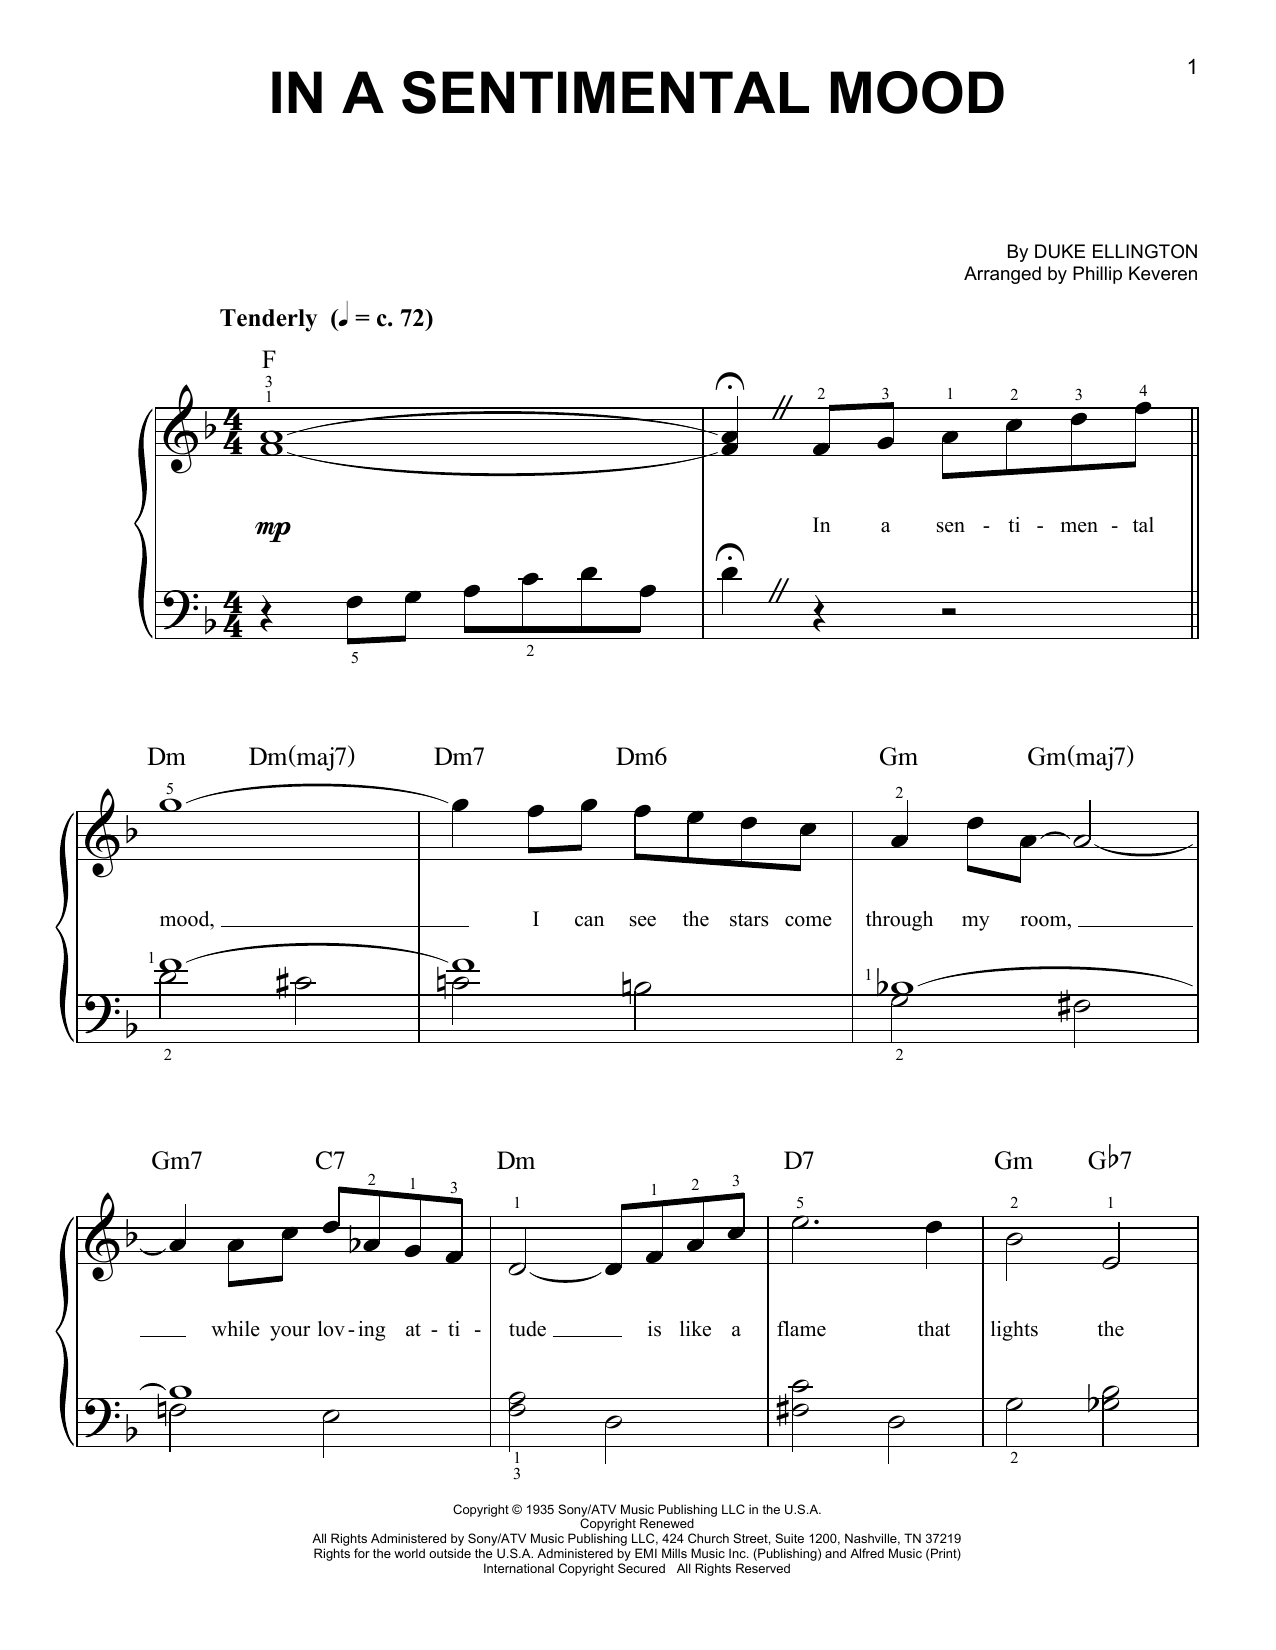 Duke Ellington In A Sentimental Mood (arr. Phillip Keveren) Sheet Music Notes & Chords for Easy Piano - Download or Print PDF